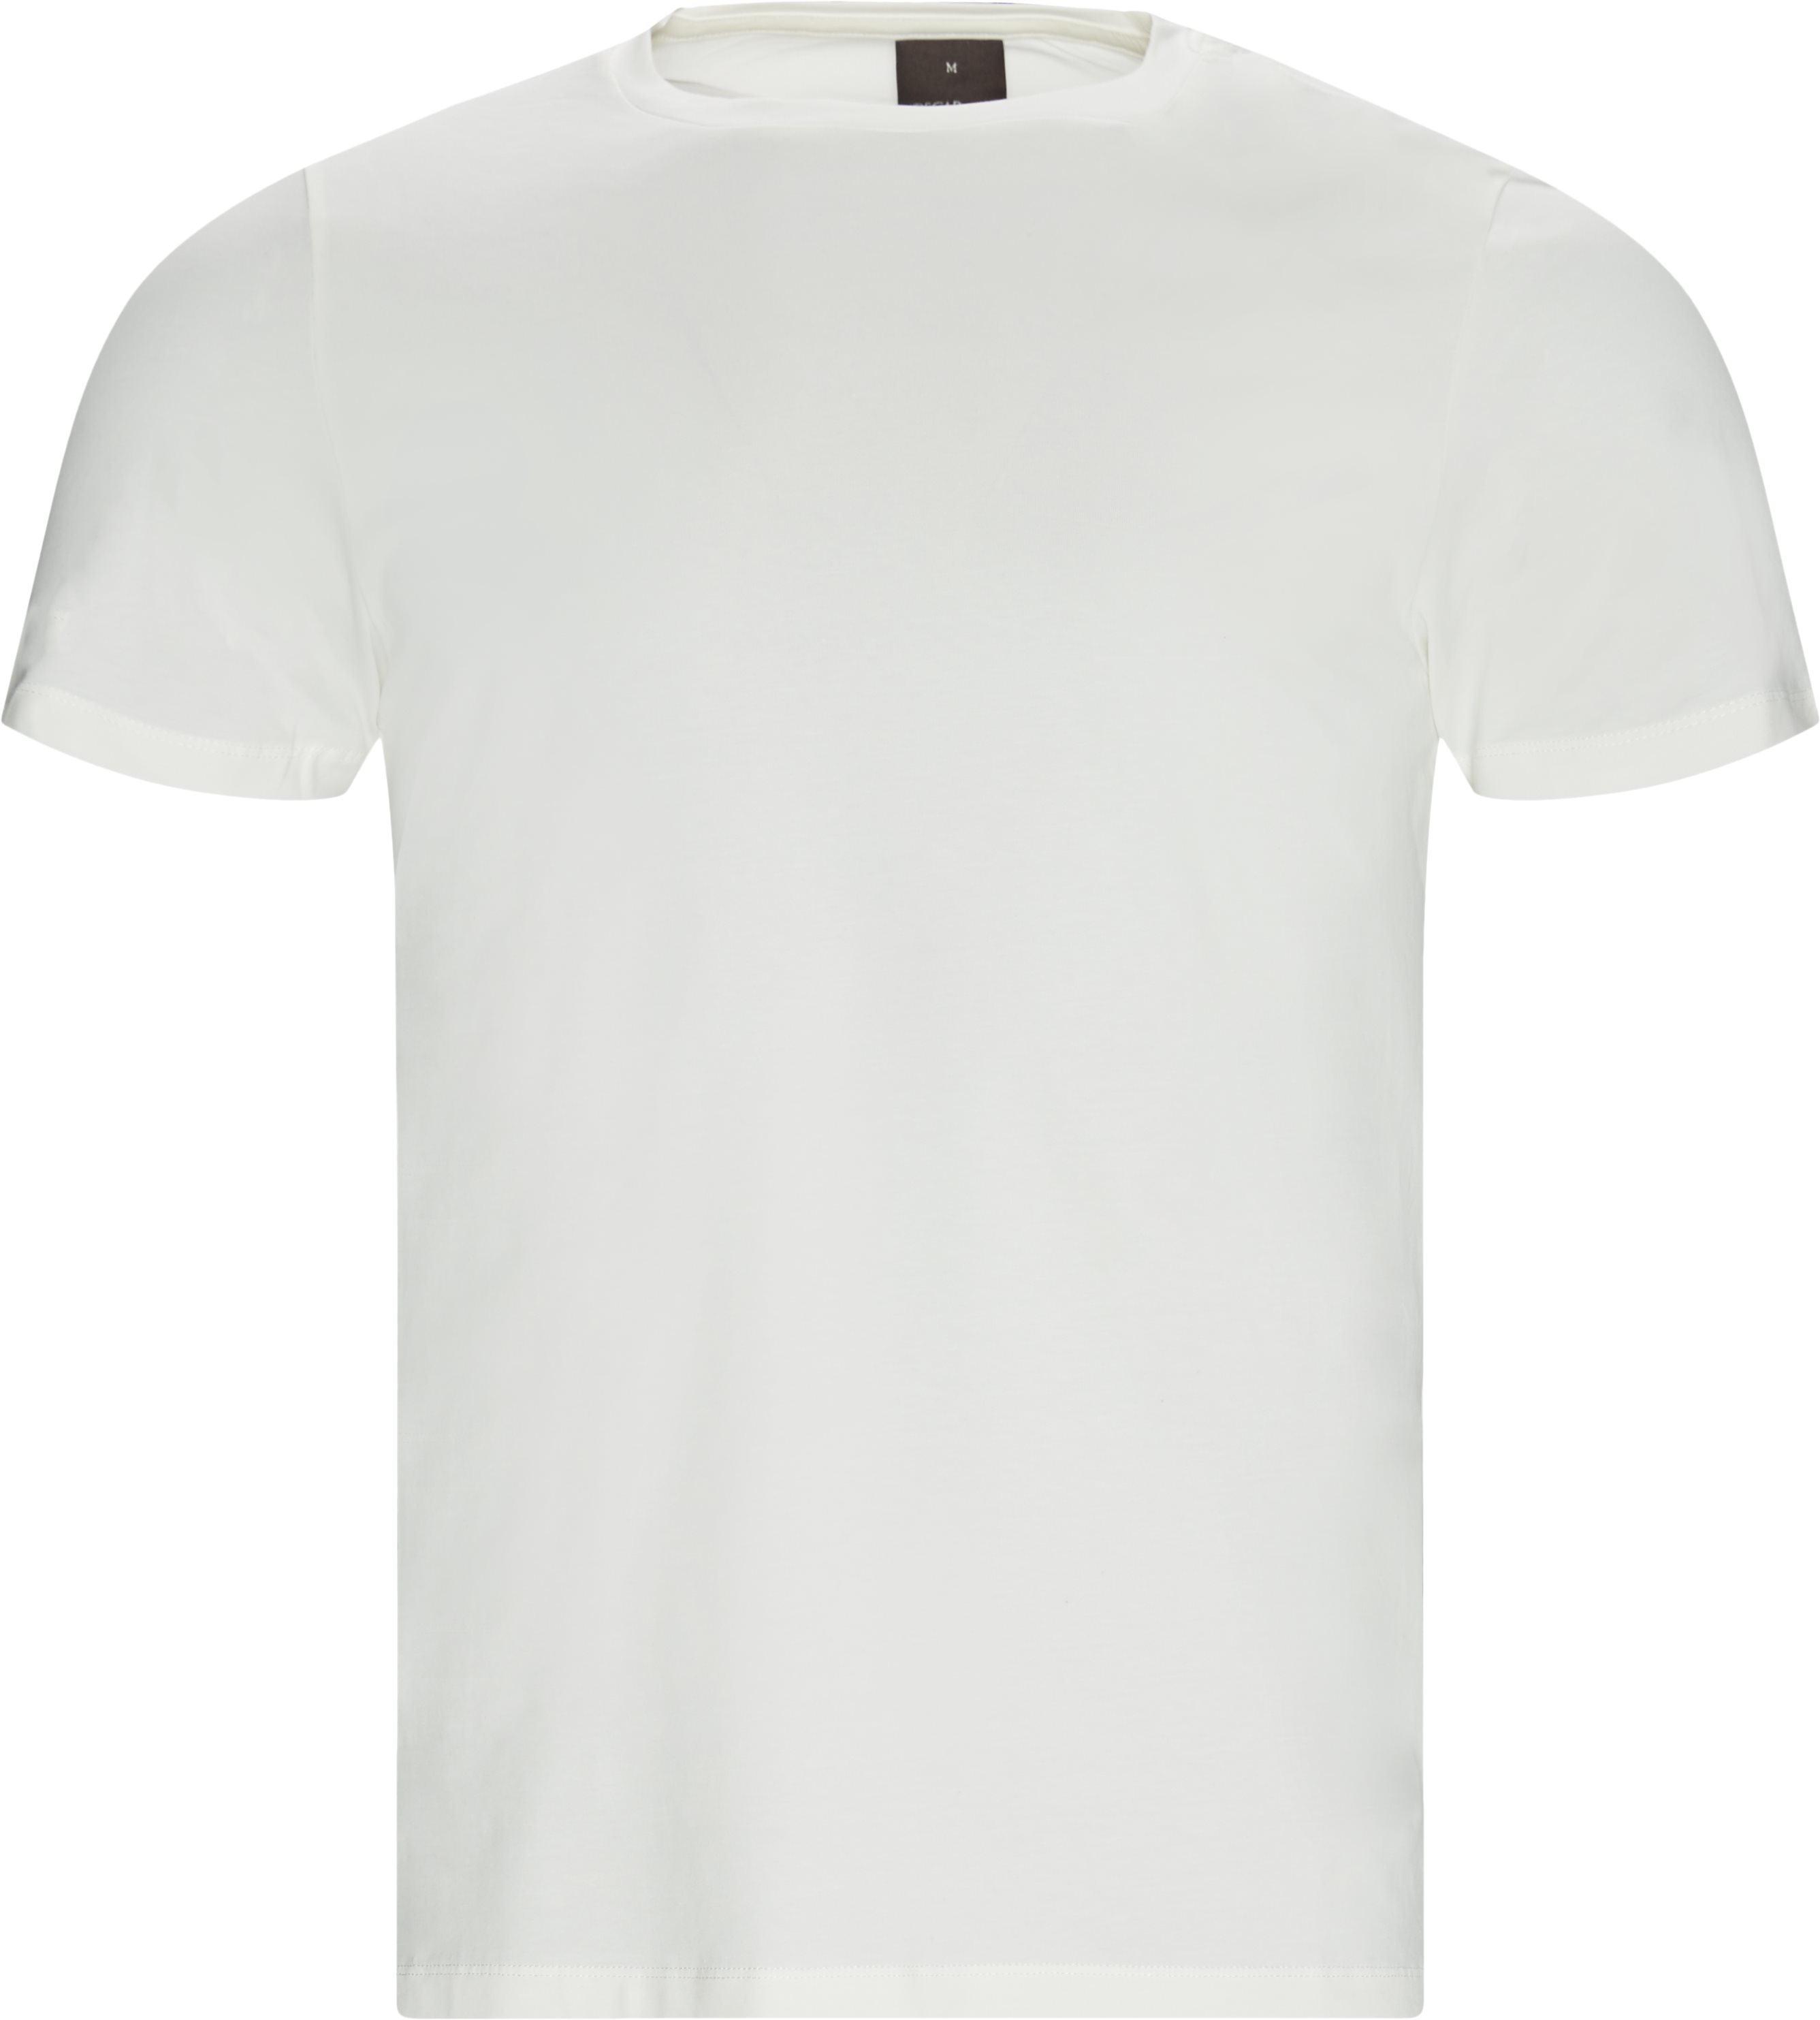 Kyran T-shirt - T-shirts - Regular fit - Hvid